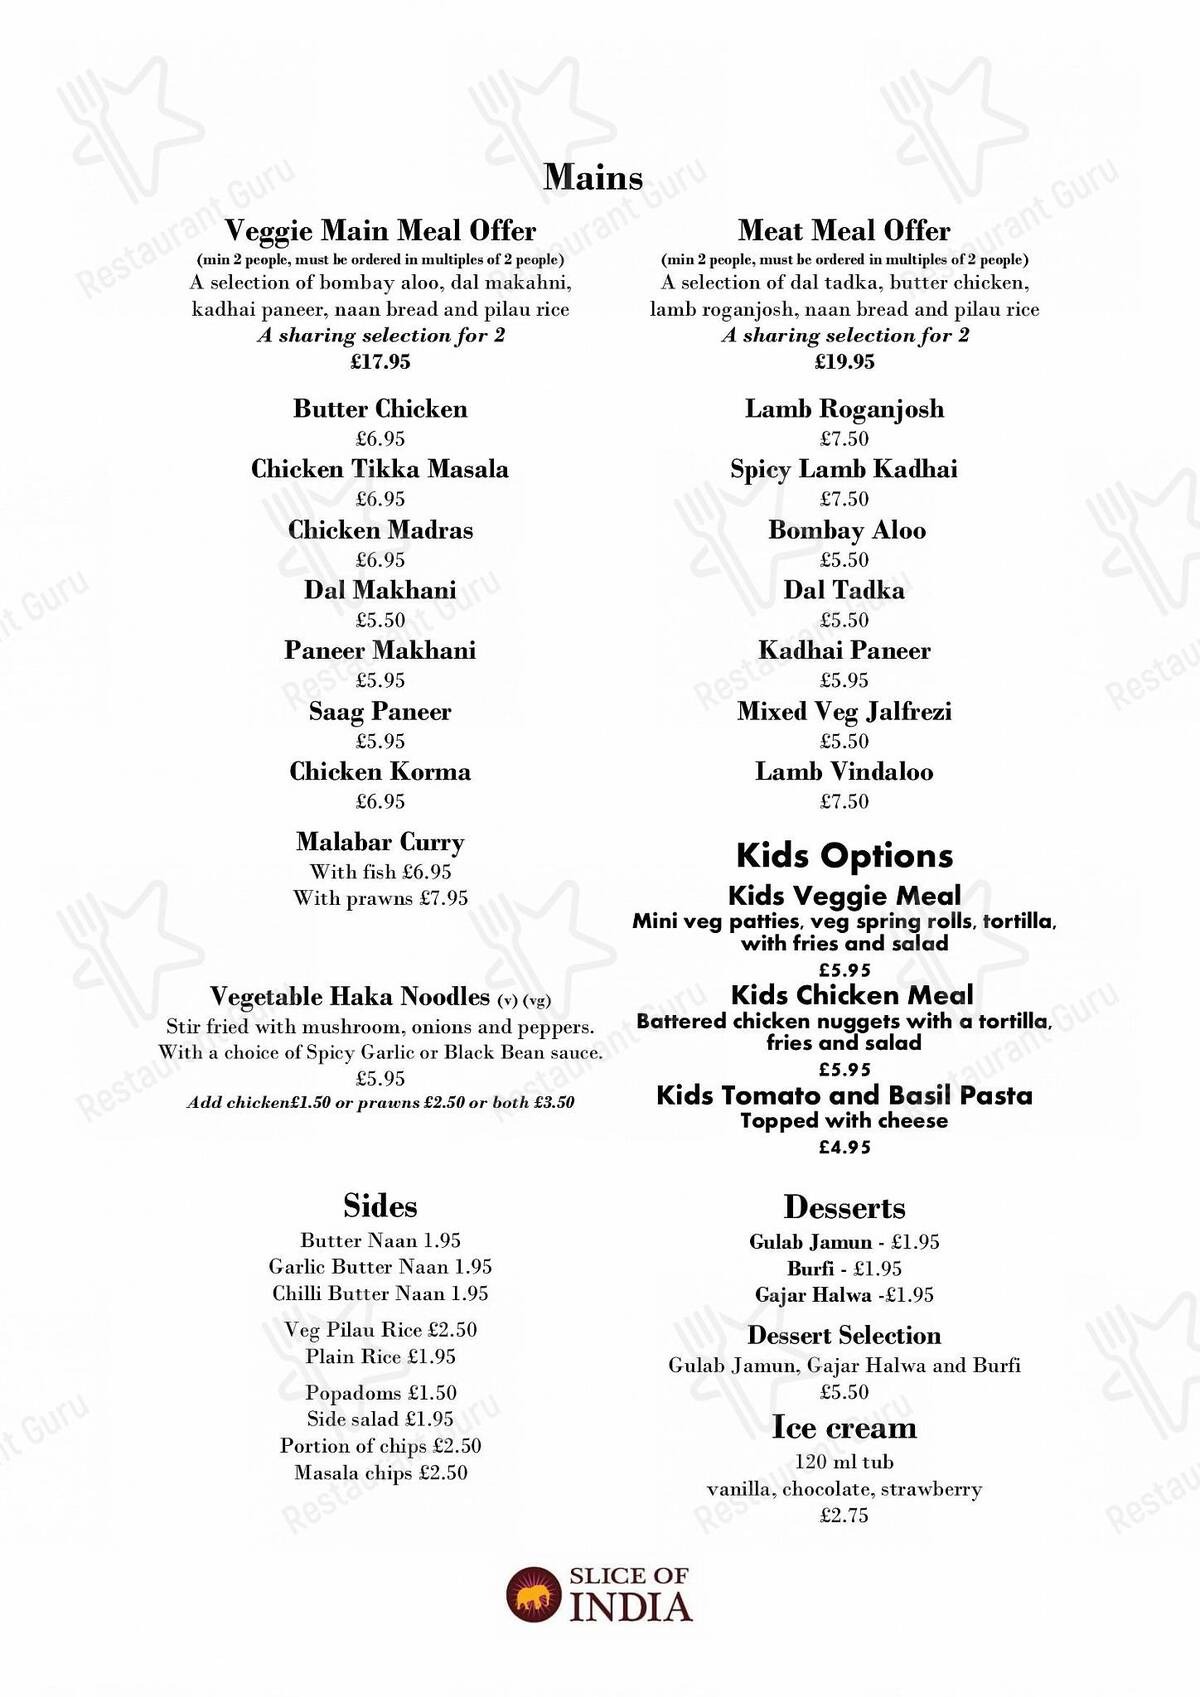 Slice-Of-India-Pub-and-bar-dine-in-menu.jpg